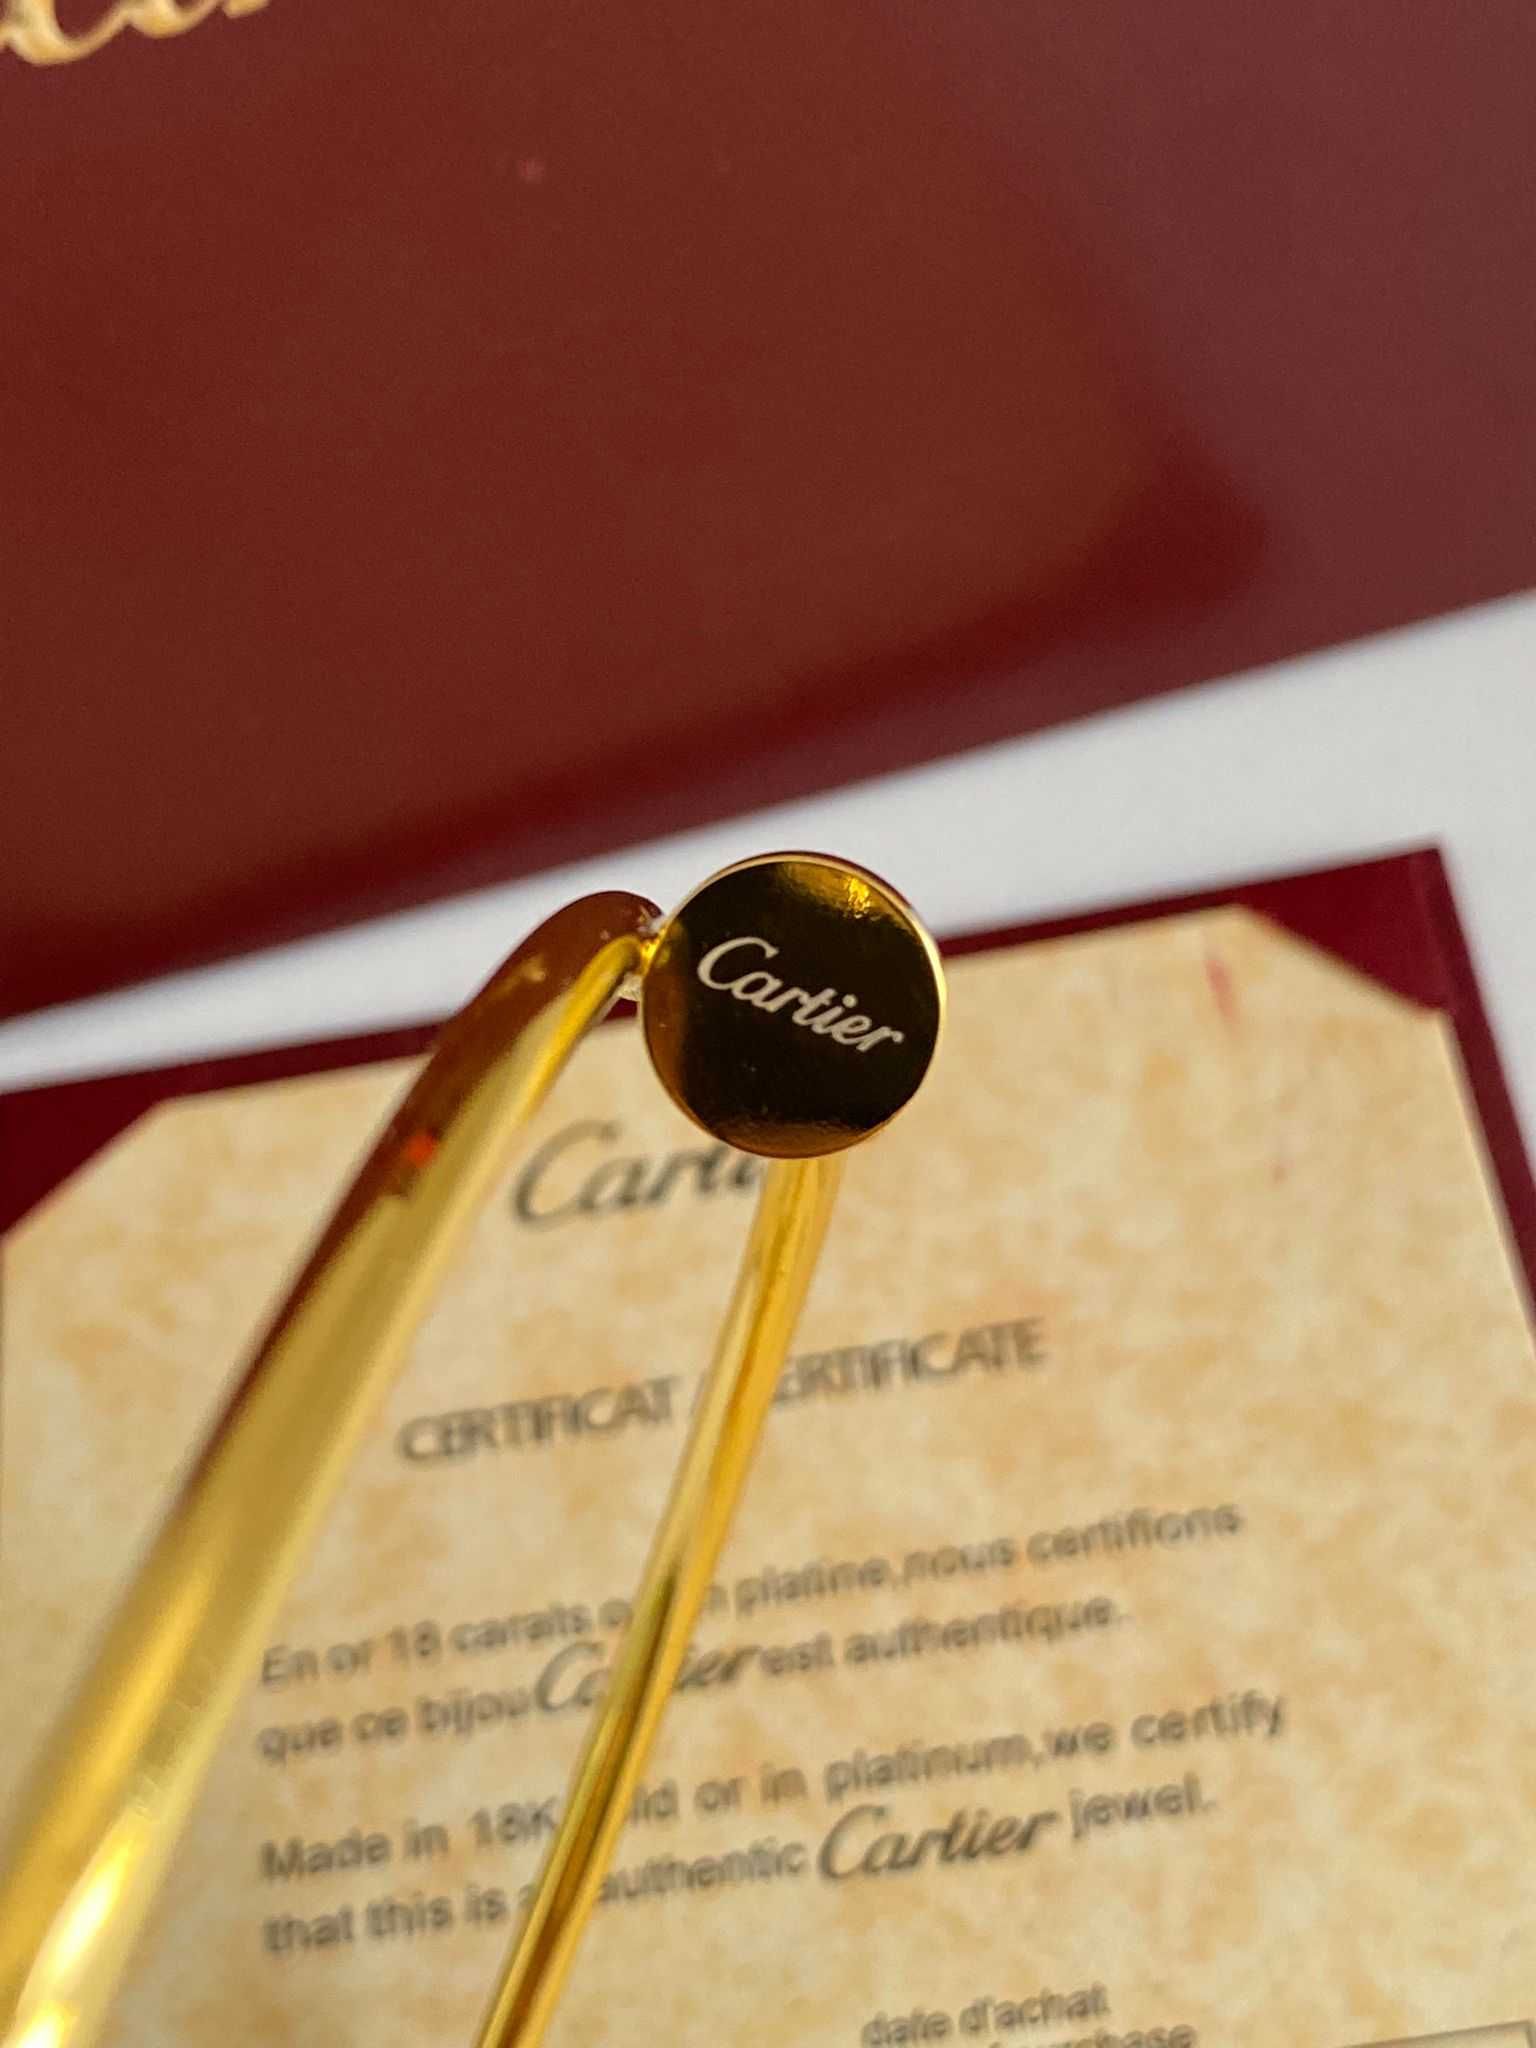 Colier Cartier Gold 750